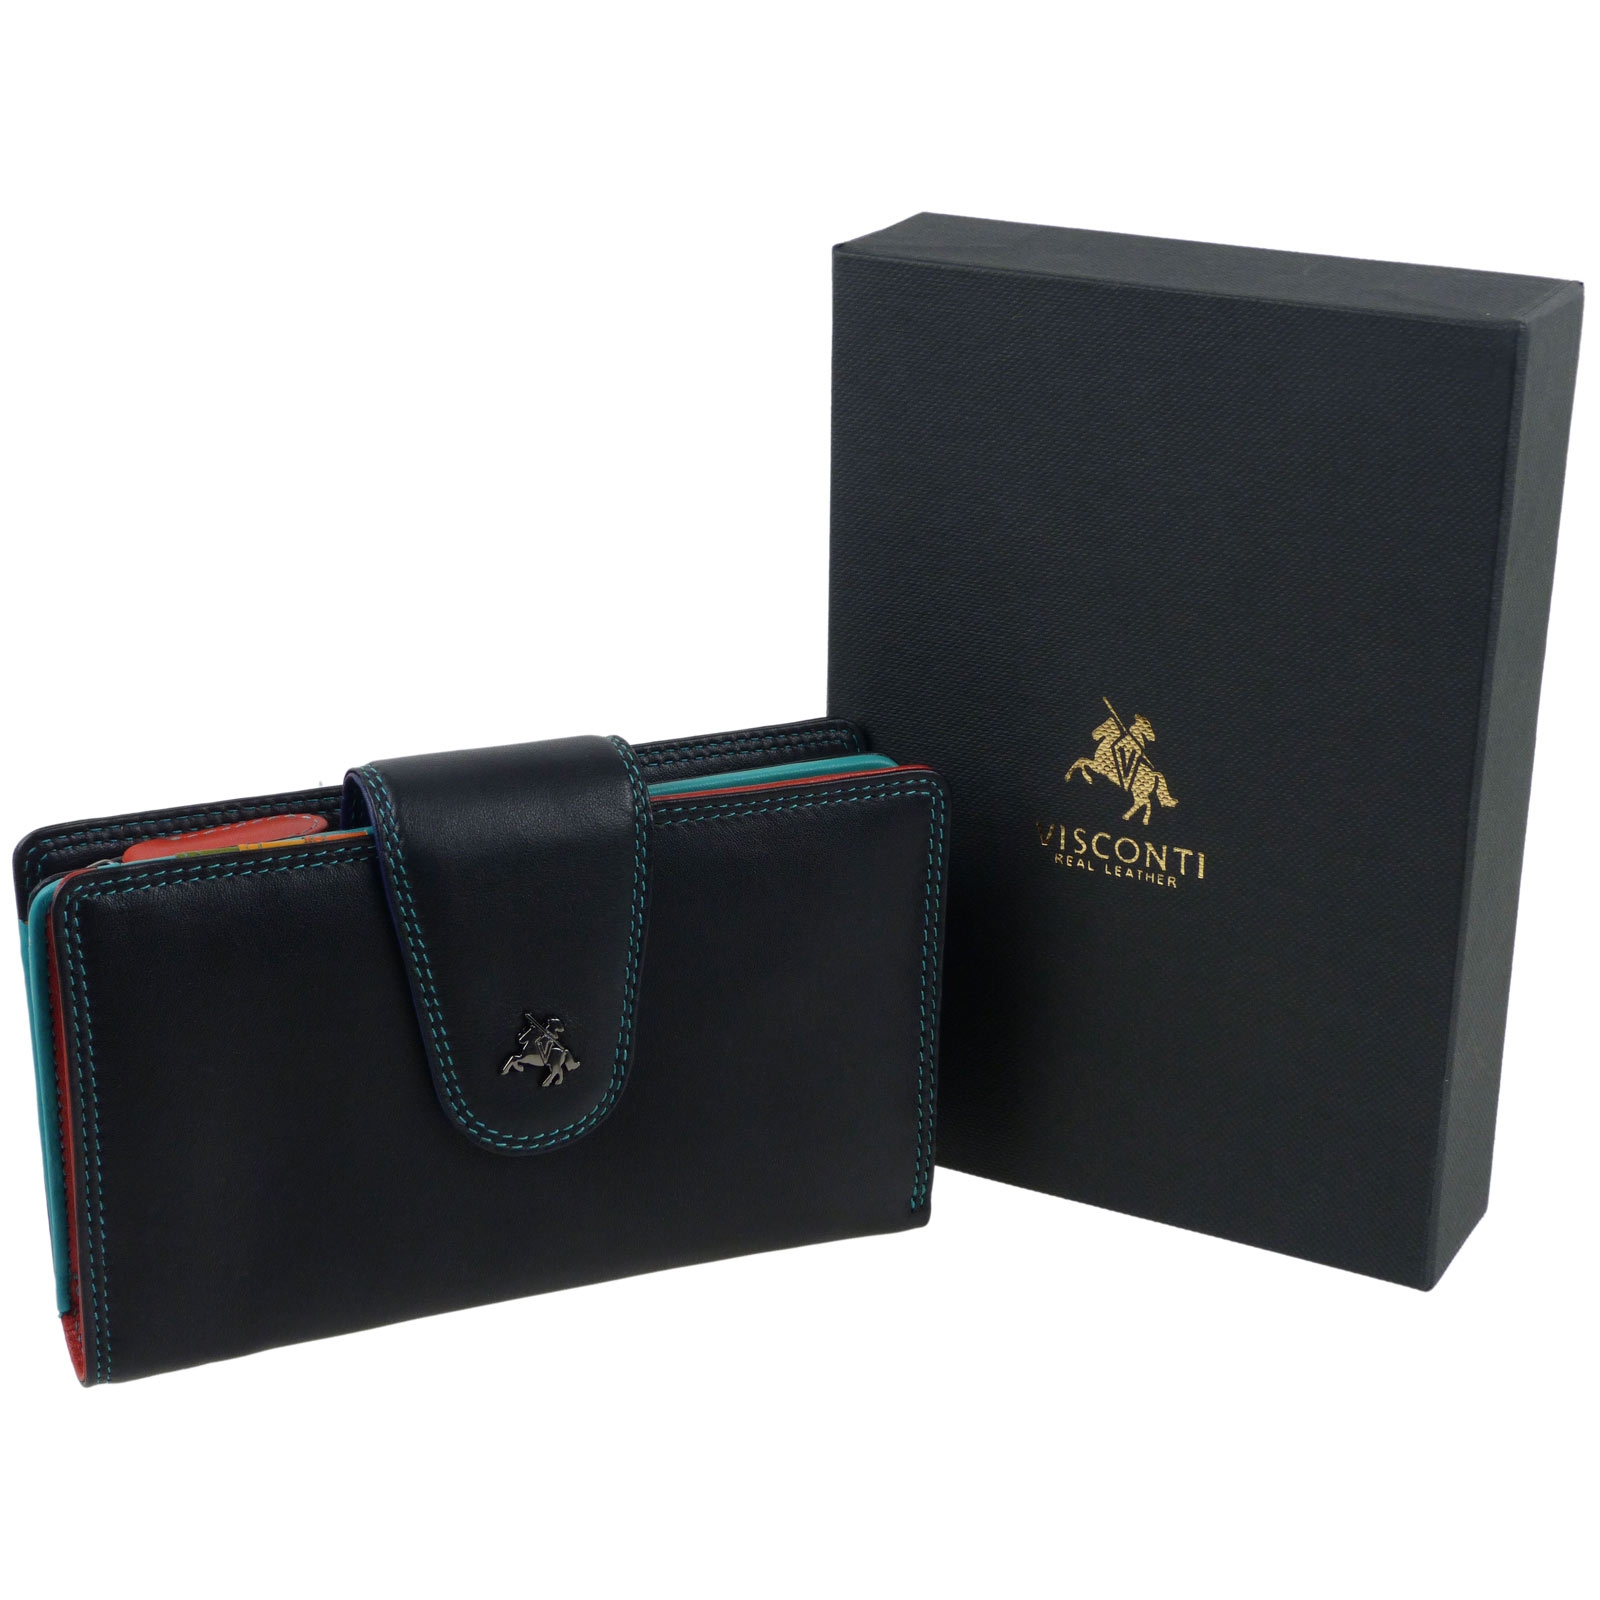 Ladies Soft Leather Purse Wallet by Visconti Designer Spectrum Boxed | eBay